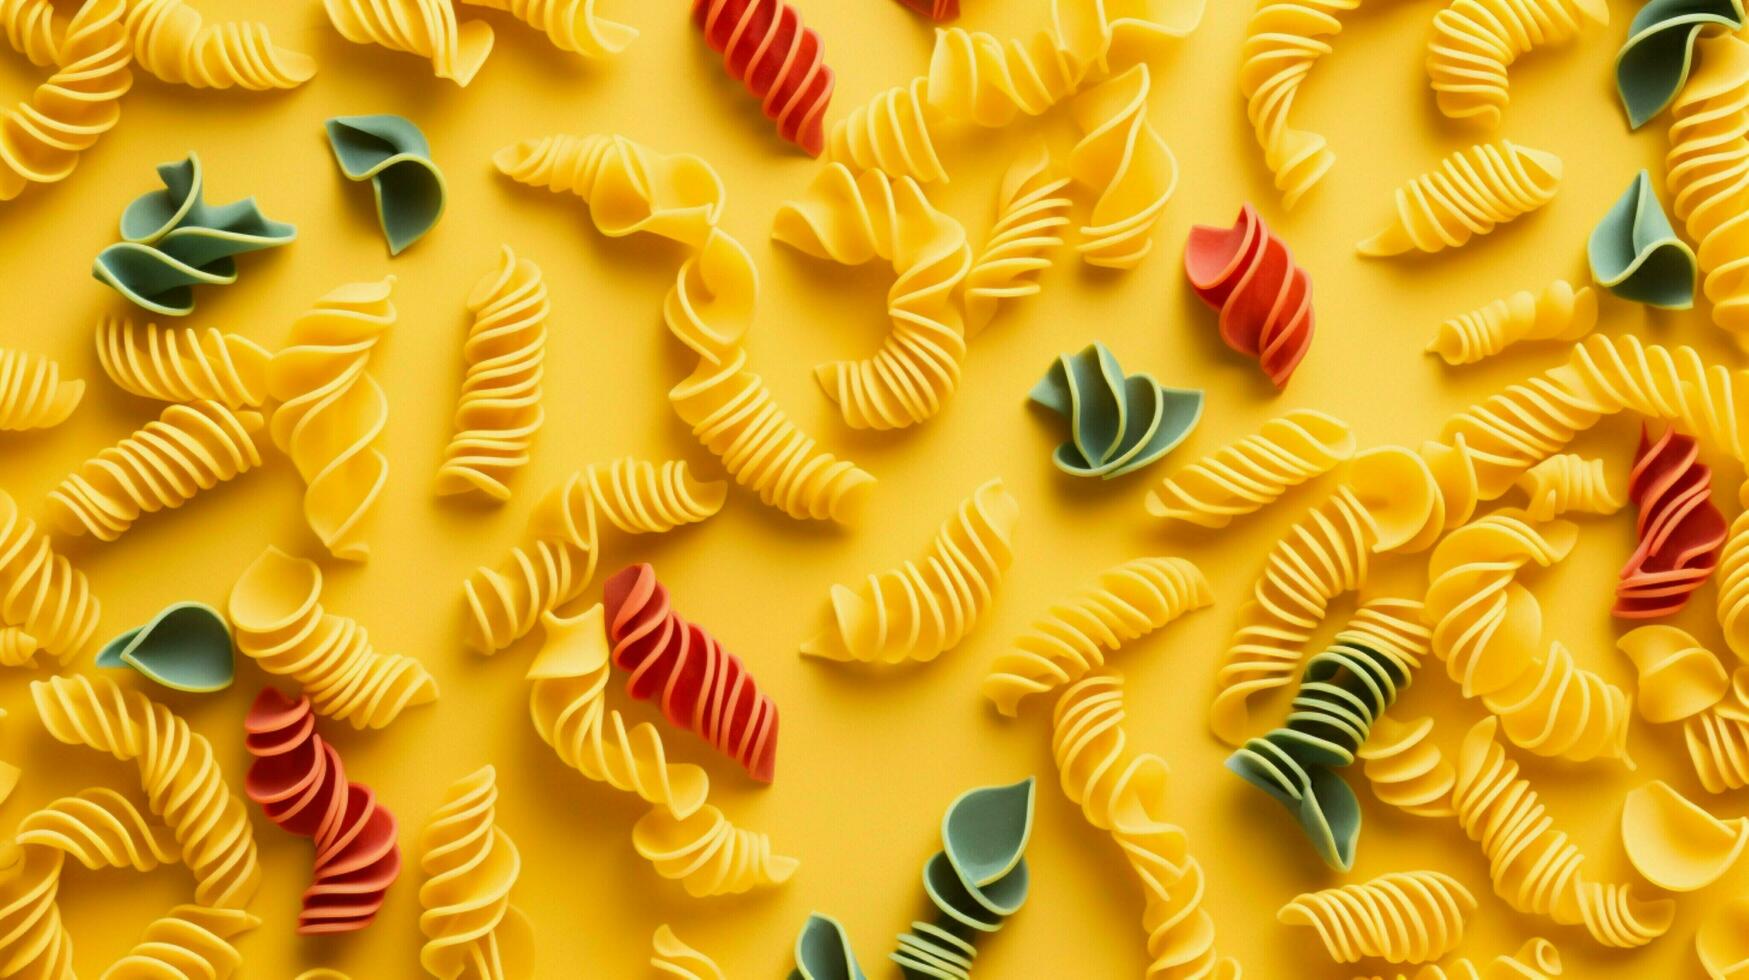 multi colored pasta pattern on yellow background photo